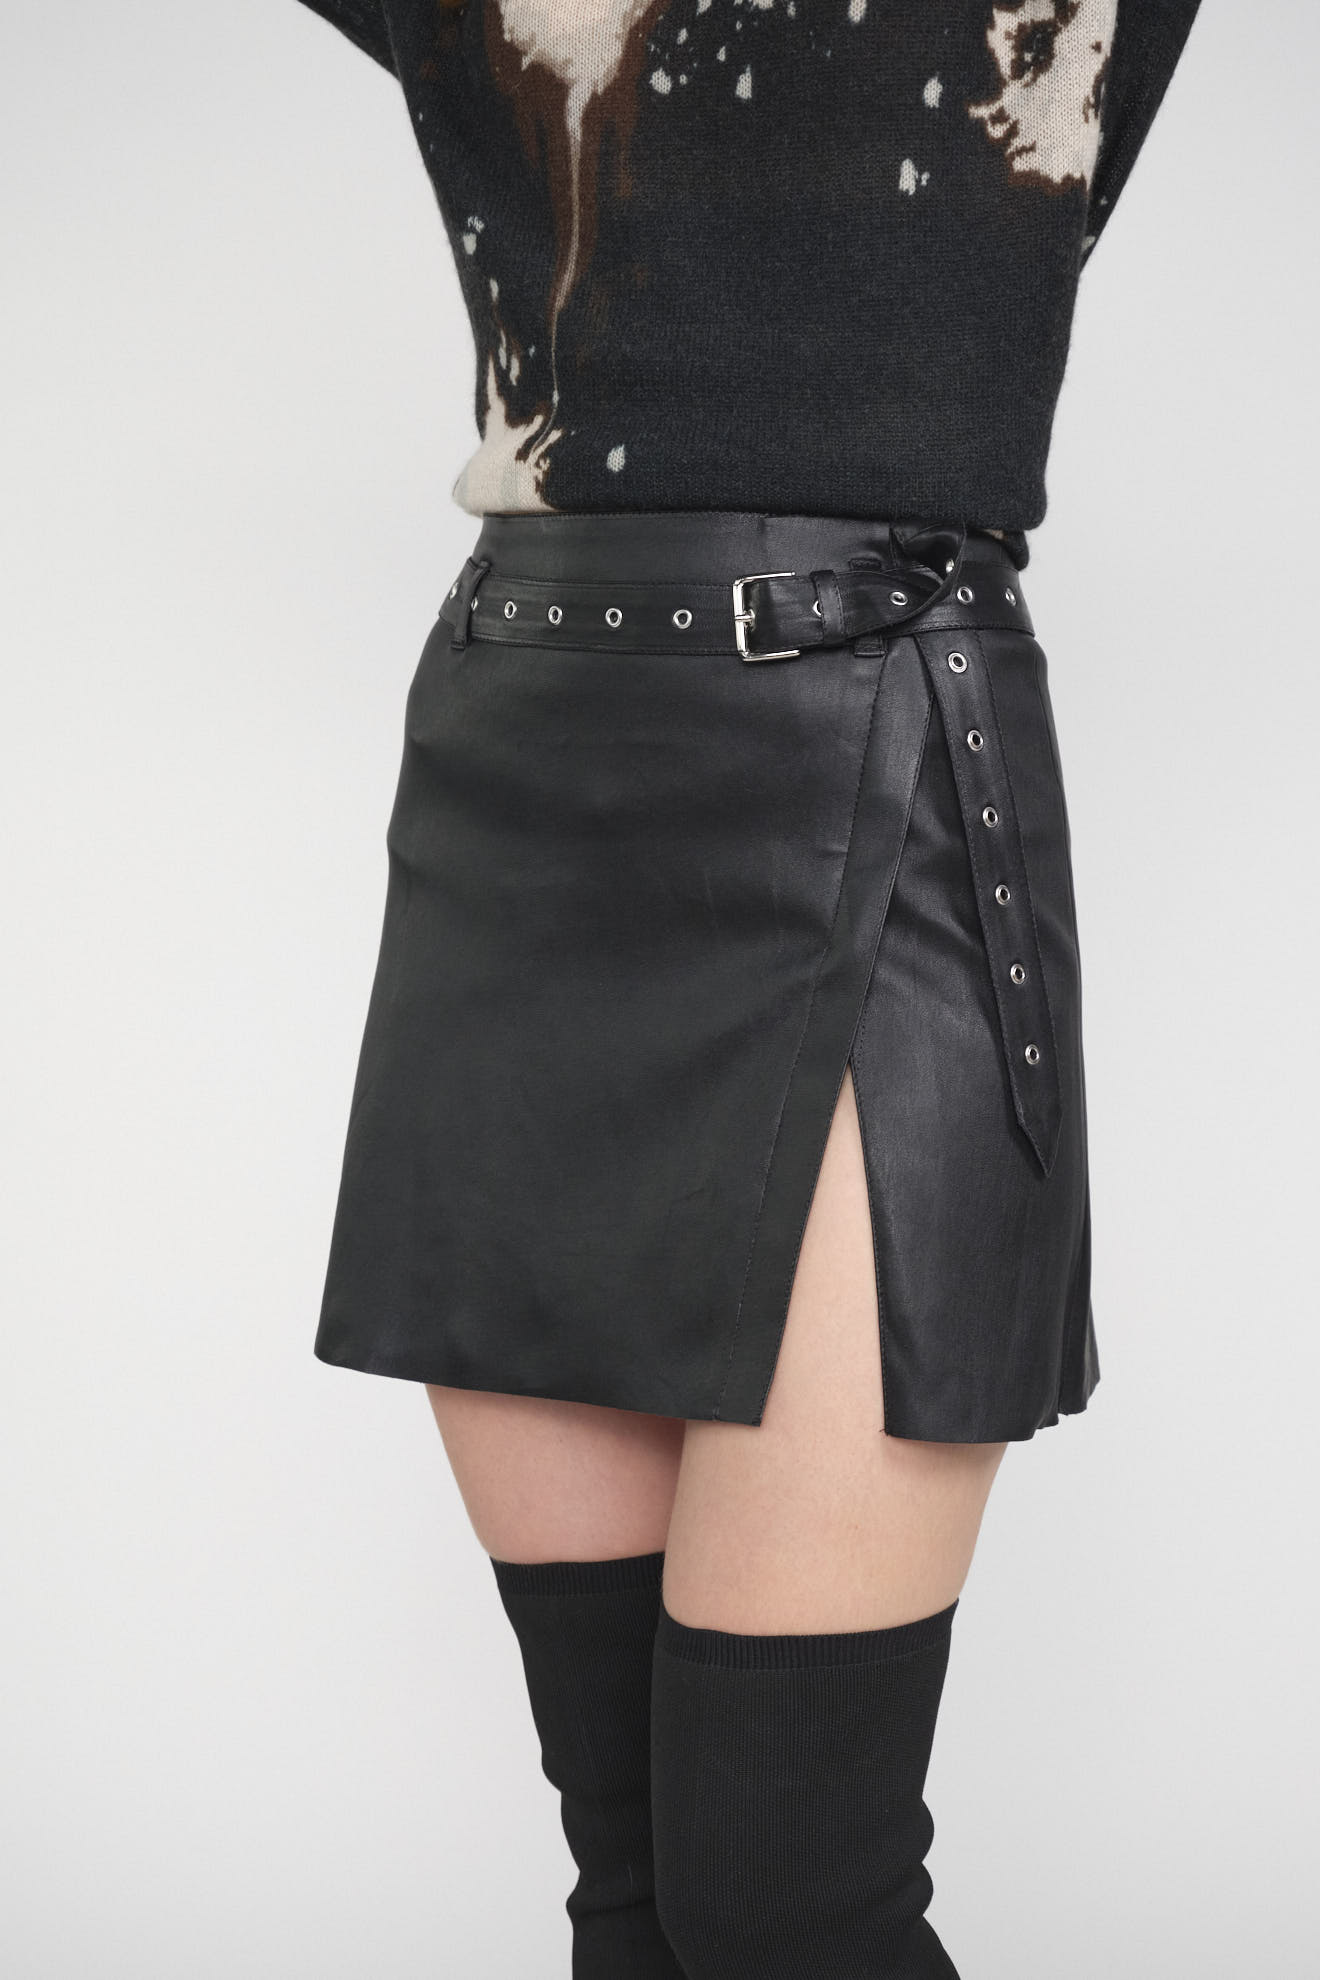 jitrois skirt black buttoned leather